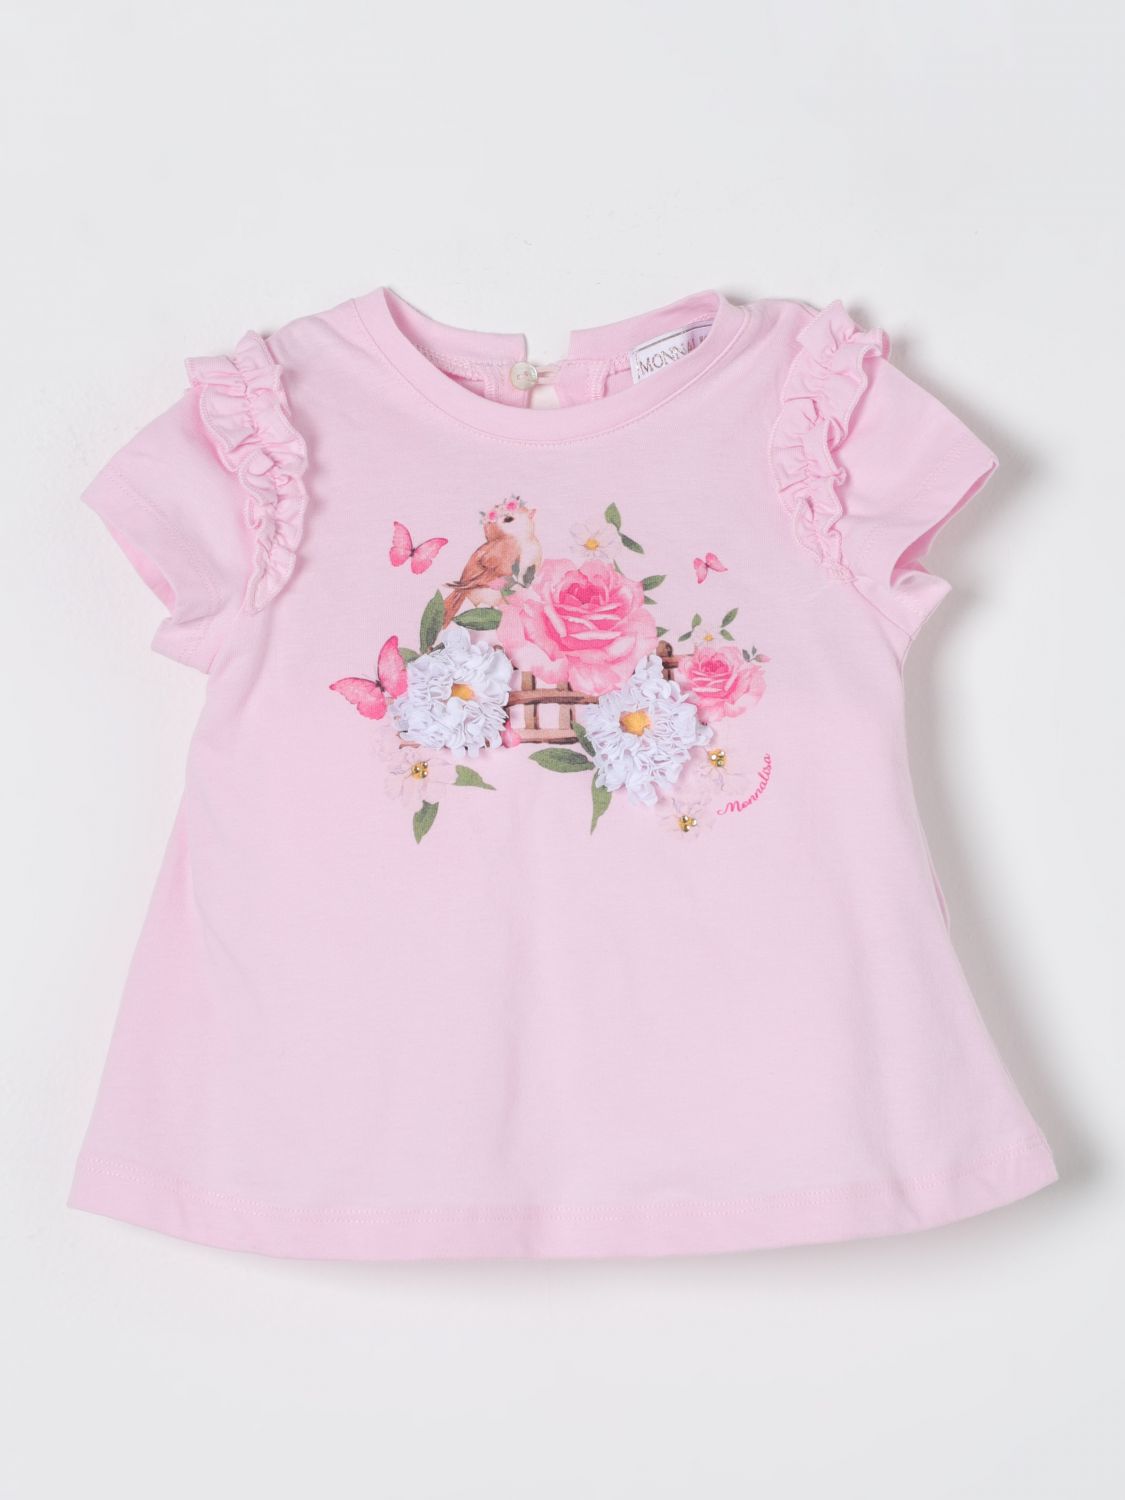 Monnalisa Babies' T-shirt  Kids Color Pink